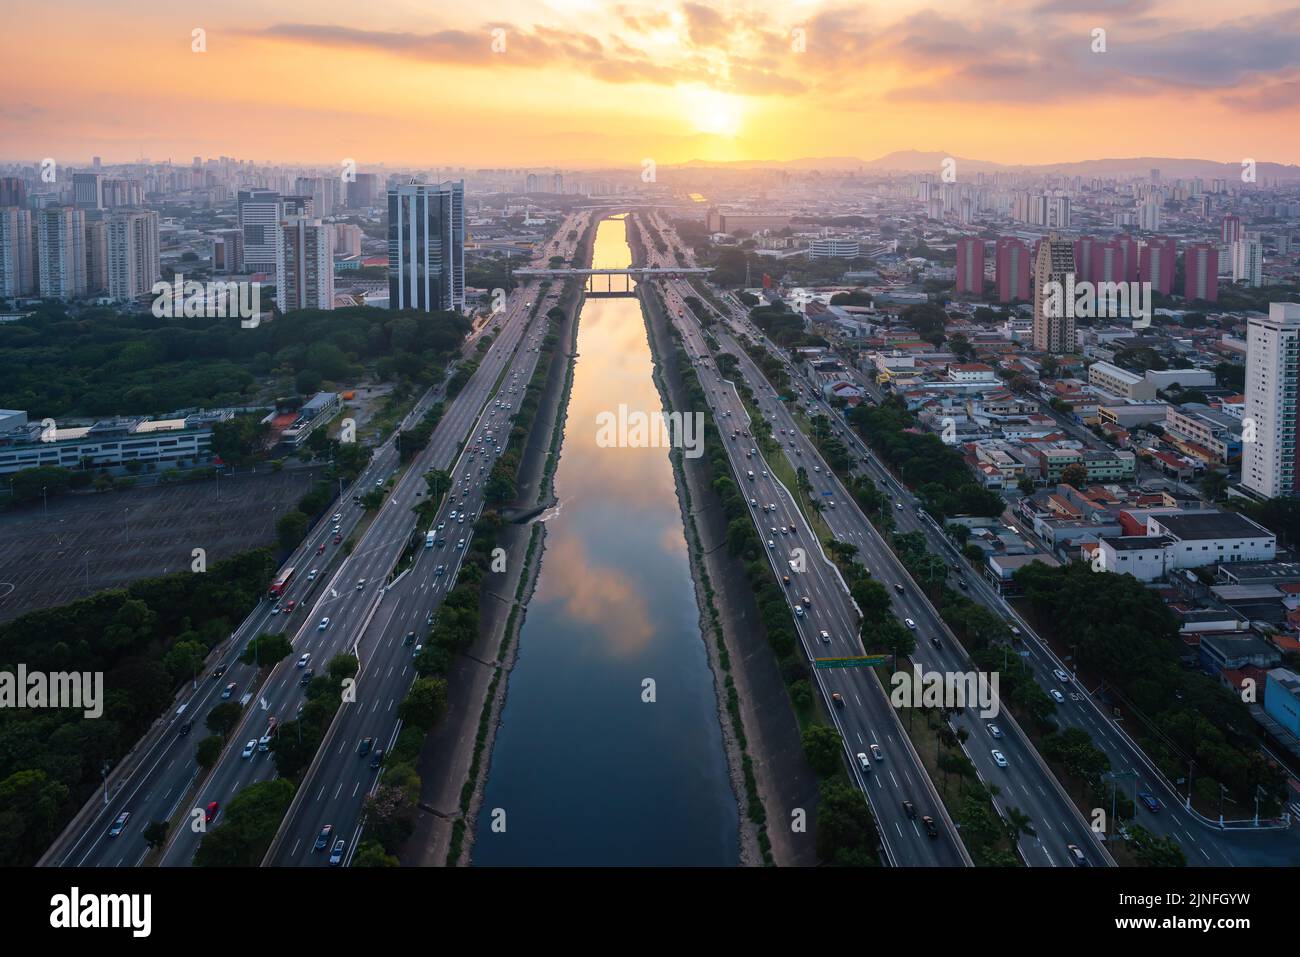 Tiete River, Marginal Tiete Highway and Limao Bridge aerial view at sunset - Sao Paulo, Brazil Stock Photo